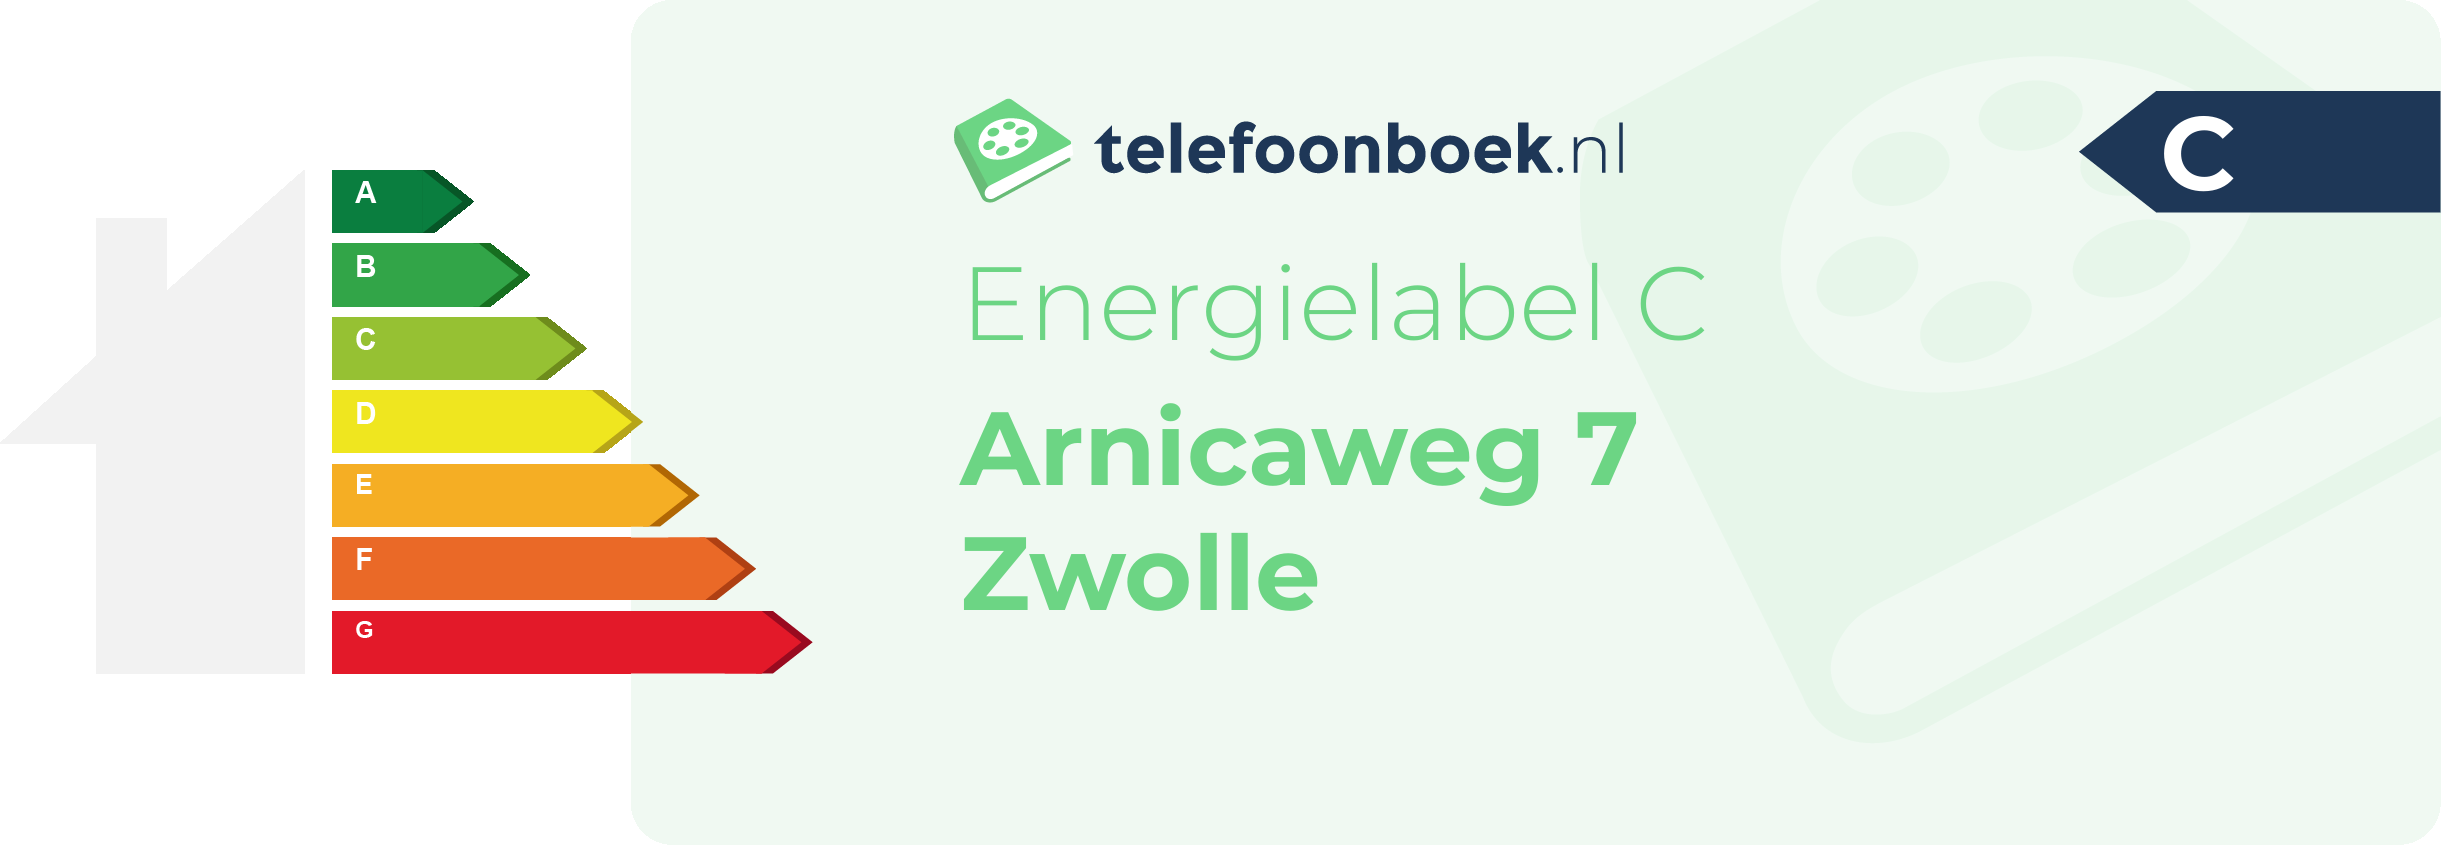 Energielabel Arnicaweg 7 Zwolle